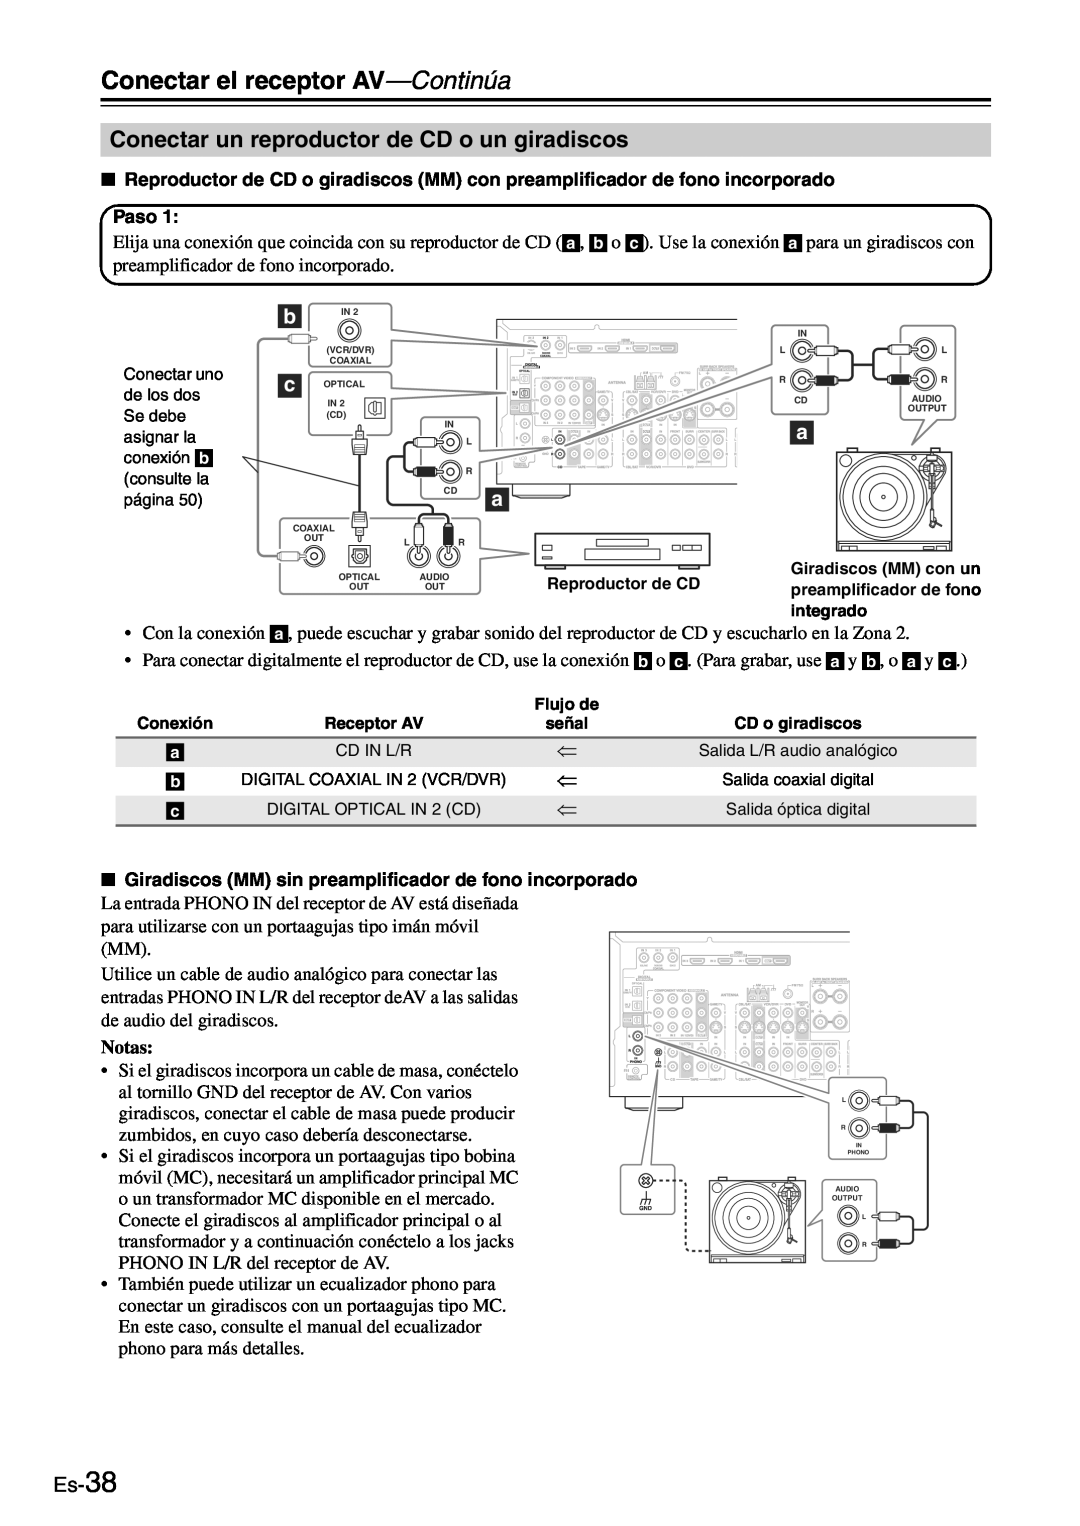 Onkyo TX-SR705 manual Conectar un reproductor de CD o un giradiscos, Es-38, Conectar el receptor AV—Continúa, Notas 